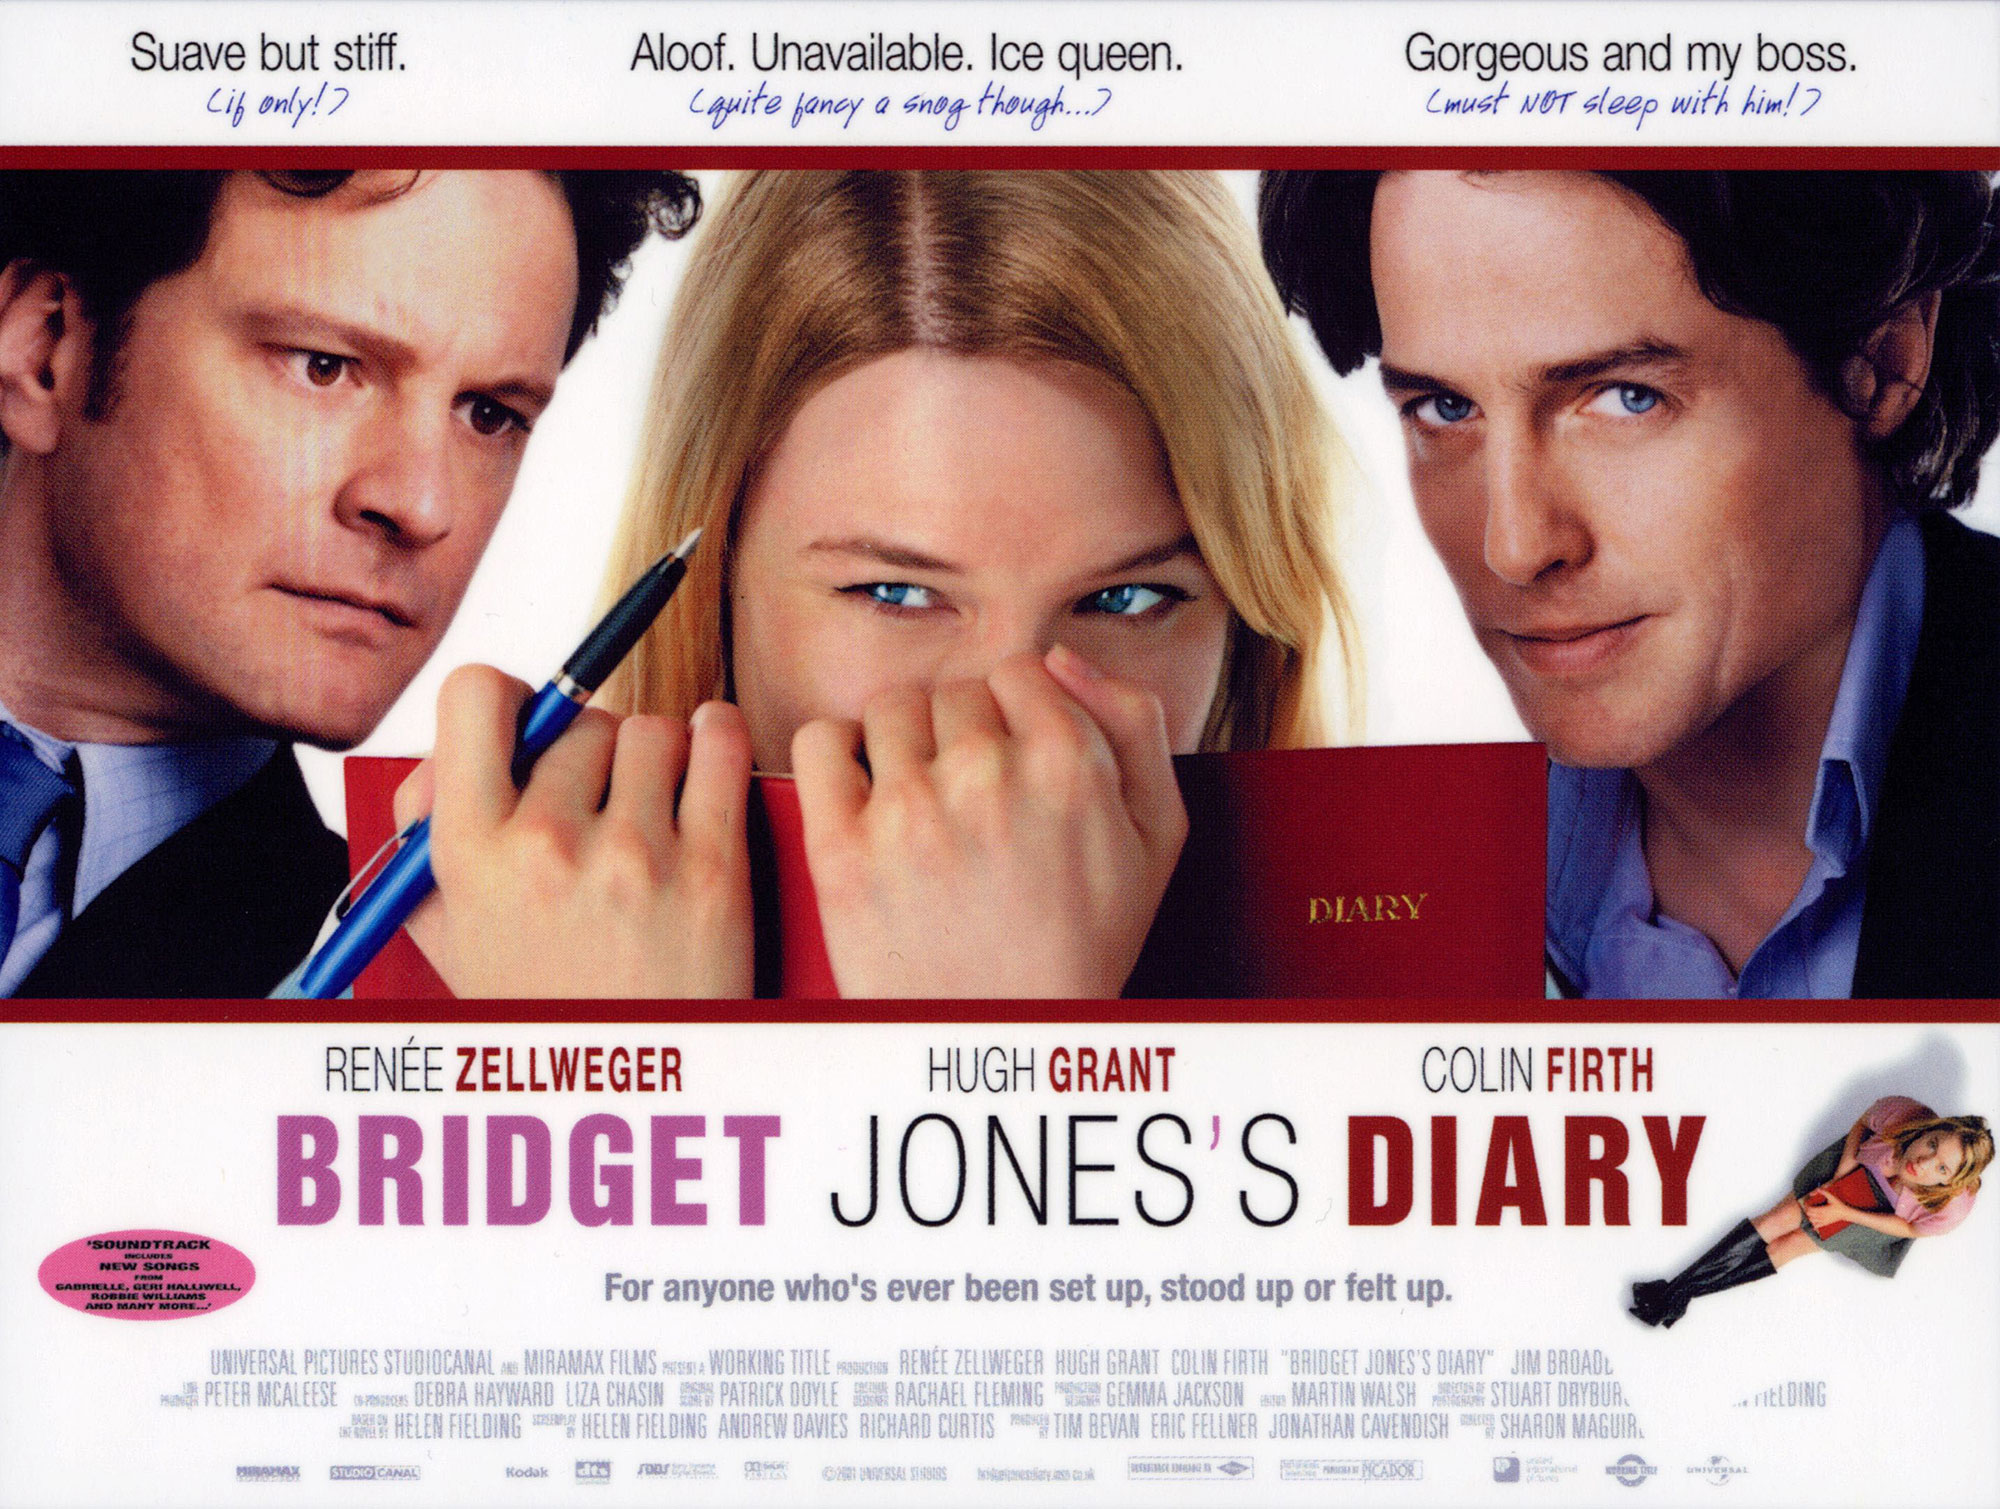 Bridget Jones's Diary cast then and now